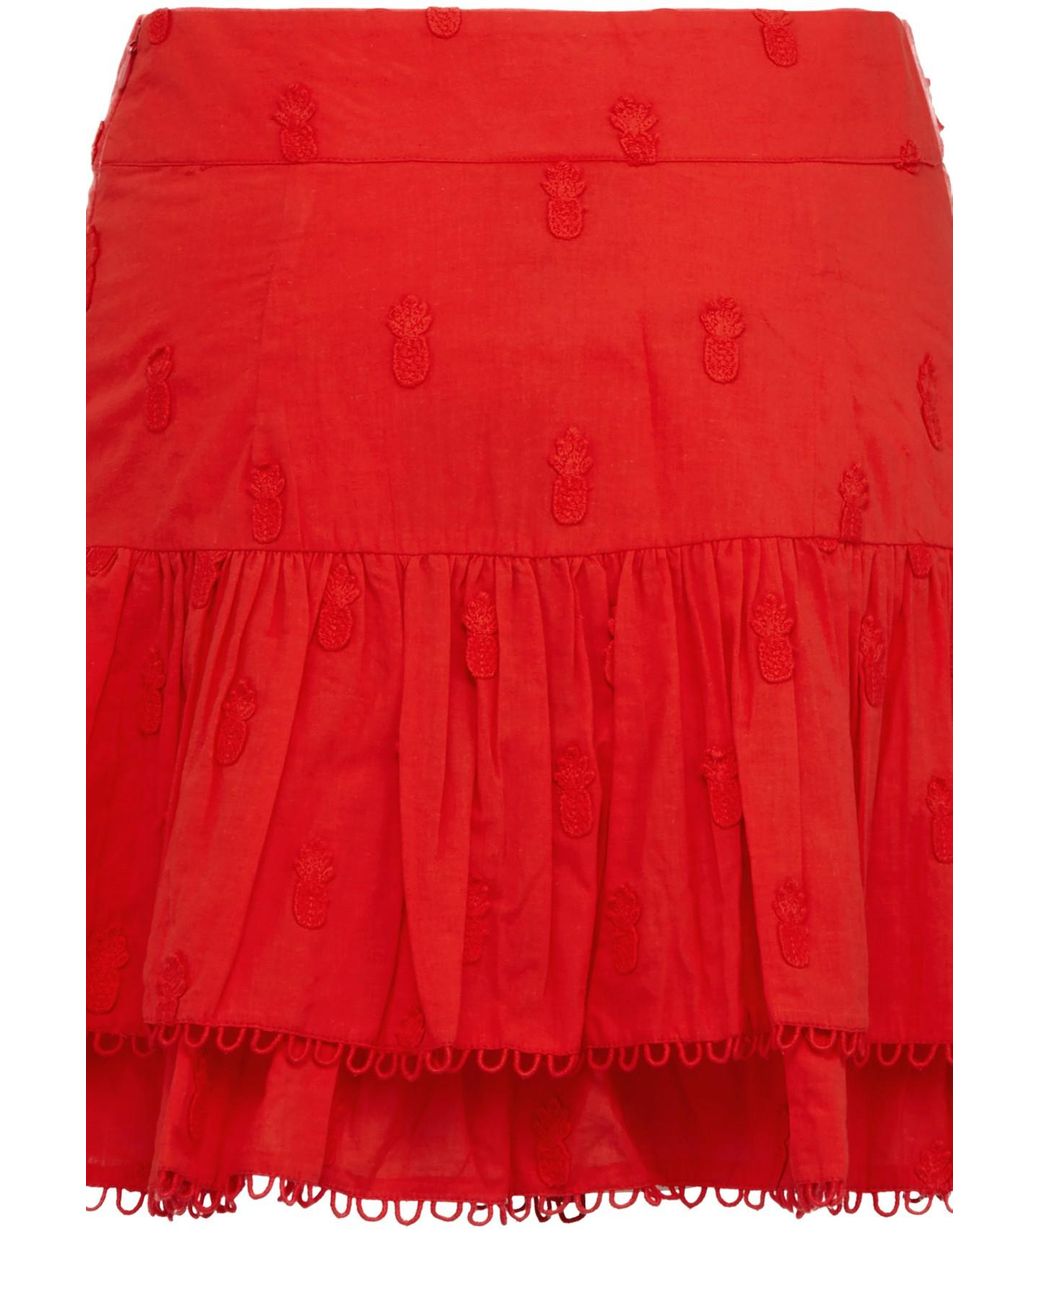 FARM Rio 3d Pineapple Mini Skirt in Red | Lyst Canada